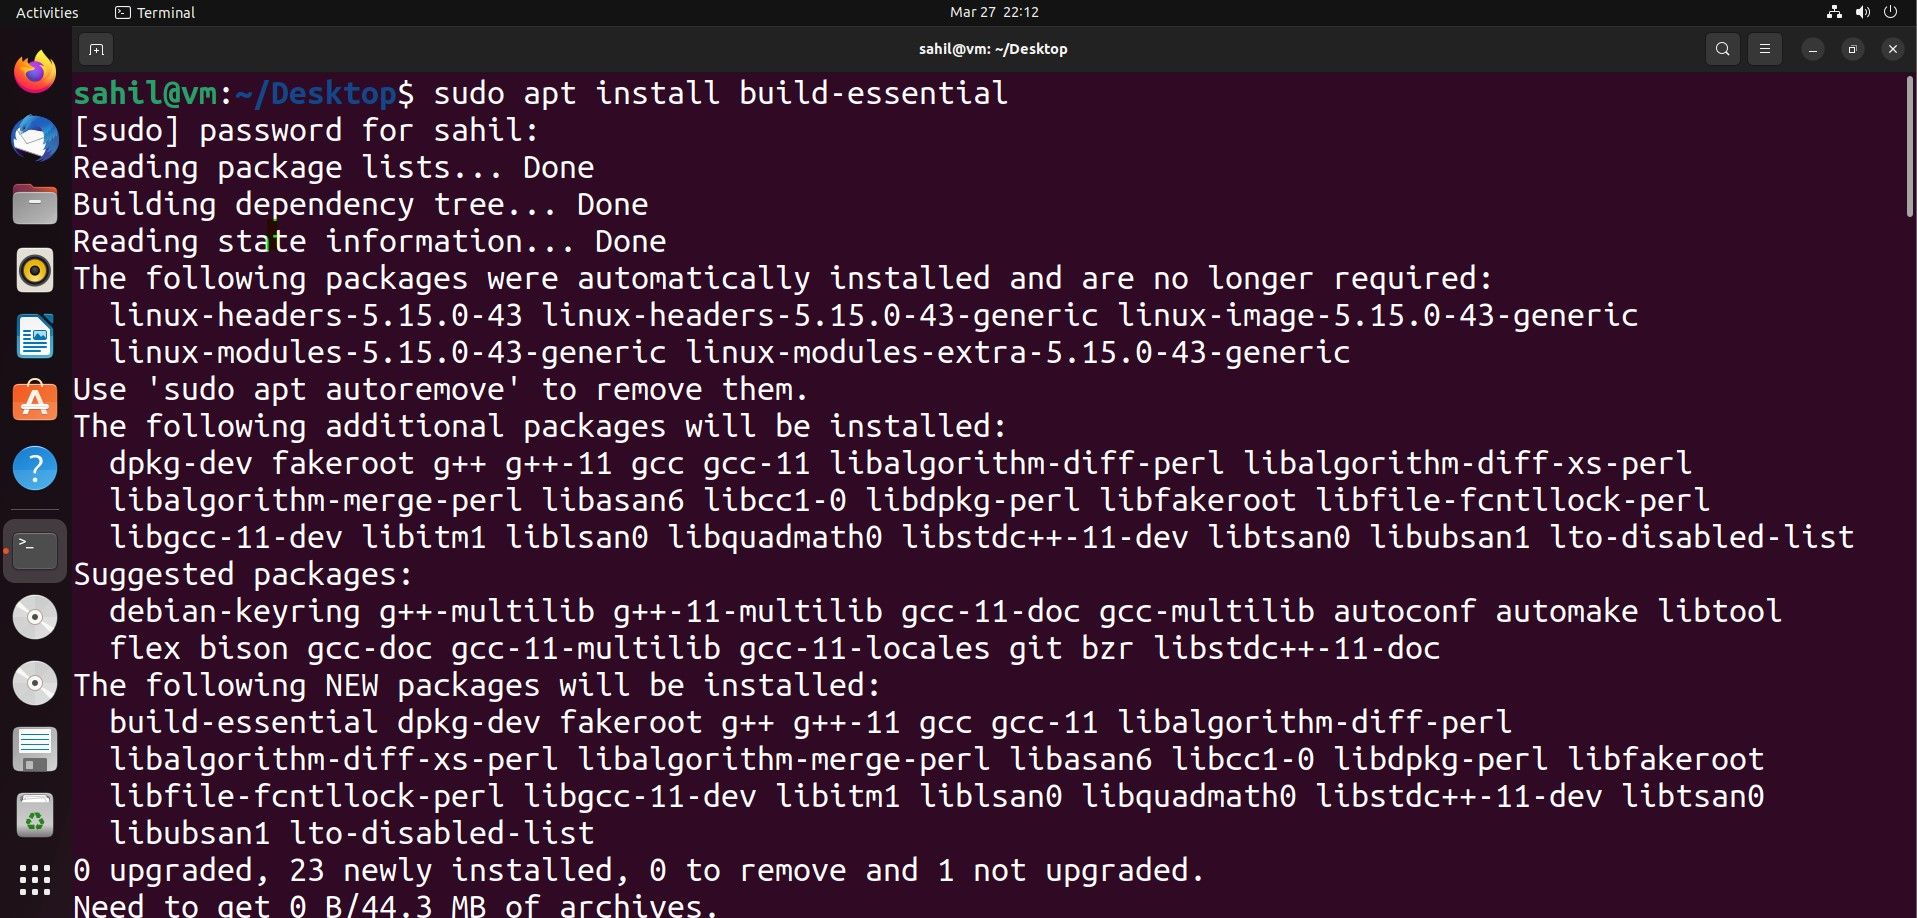 Linux Ubuntu terminal interface showing installation commands